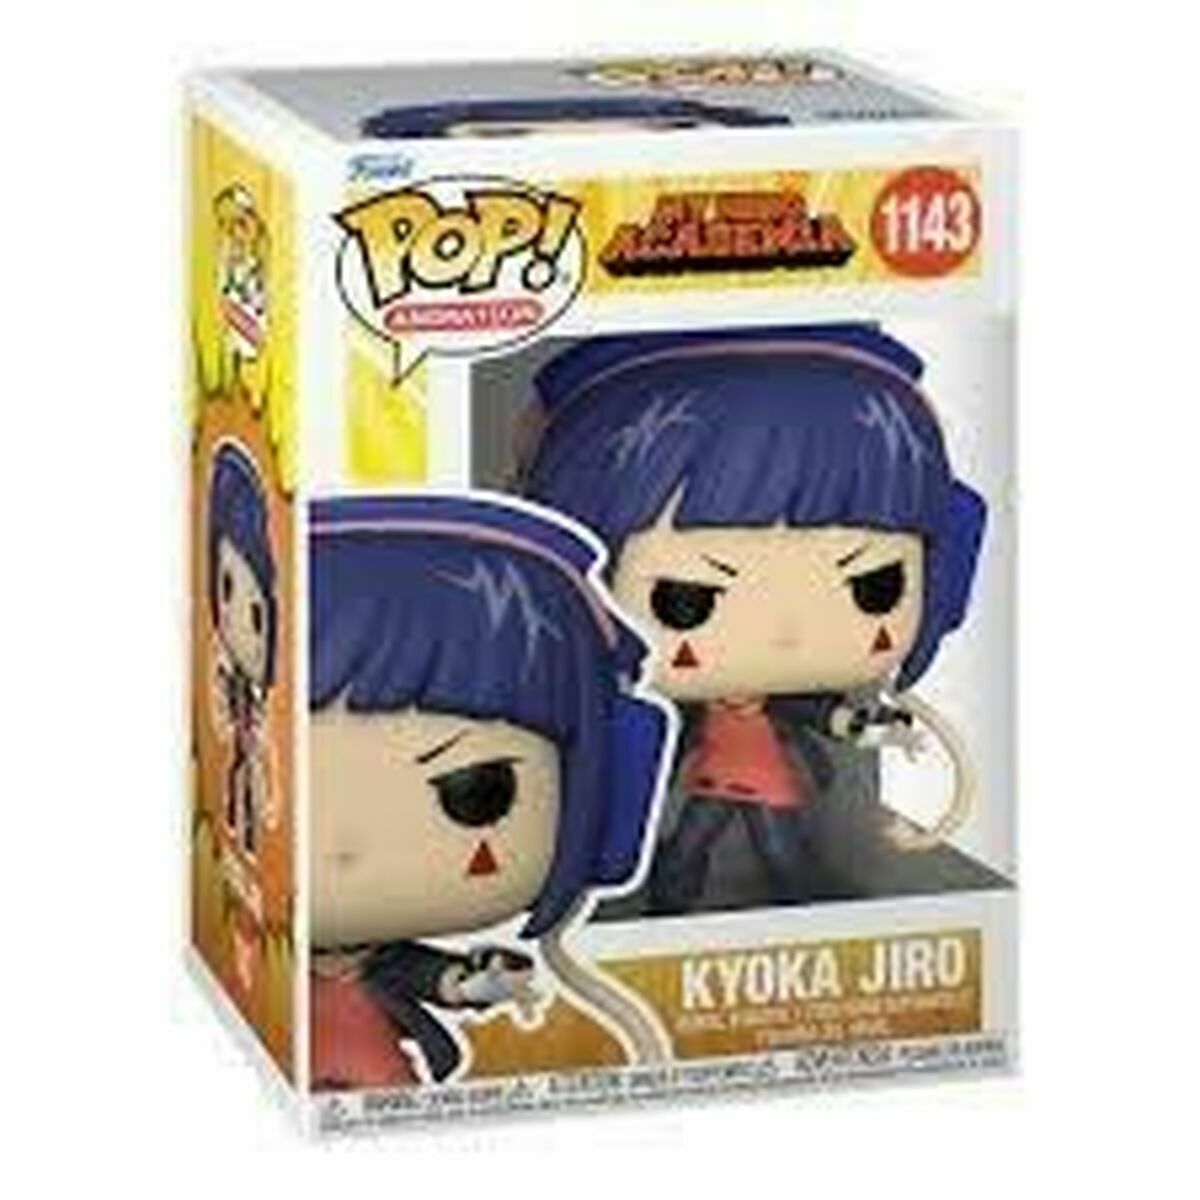 Personaggio Funko Pop! KYOKA JIRO Nº 1143